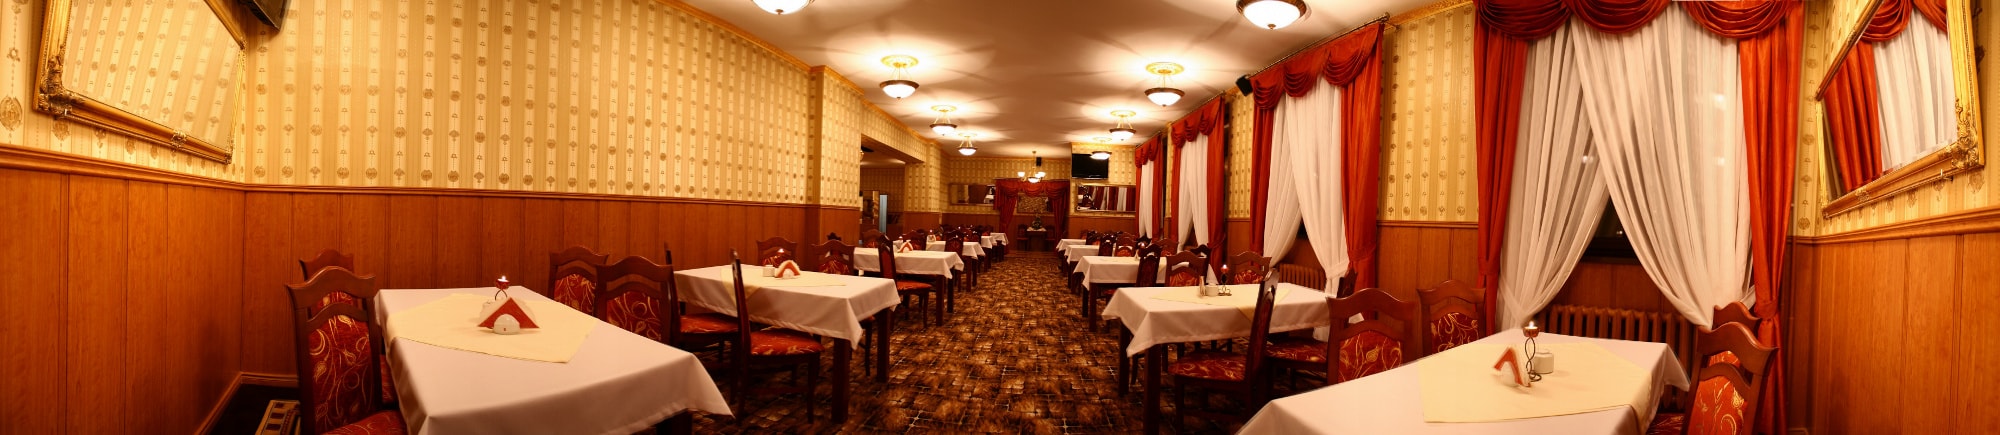 restauracja-hotel